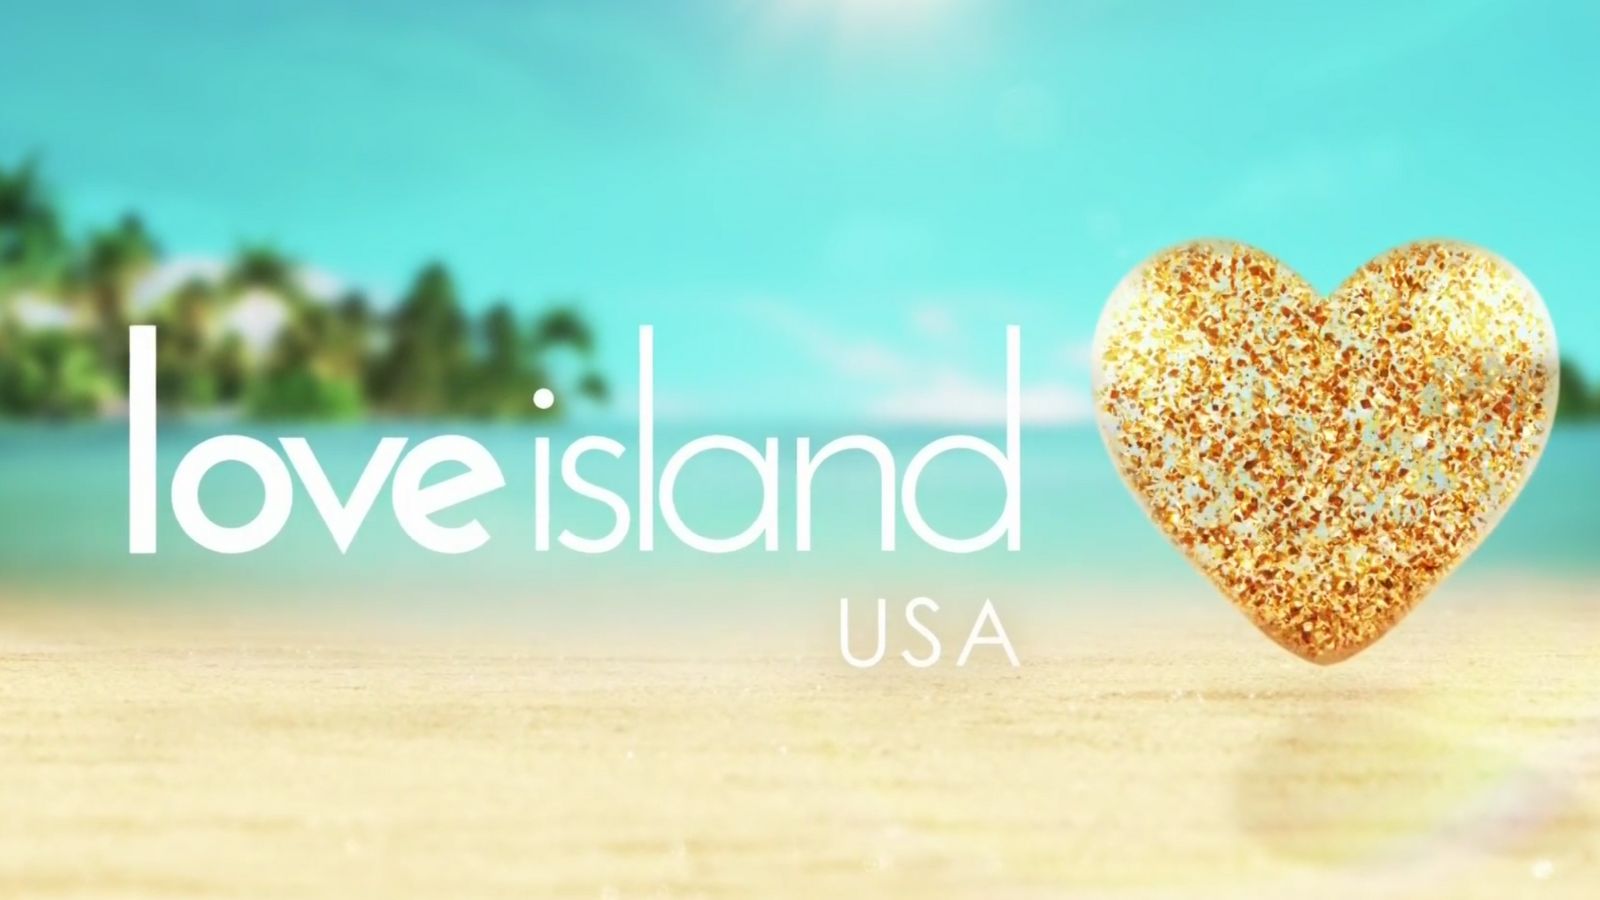 Love Island USA PEACOCK LOGO